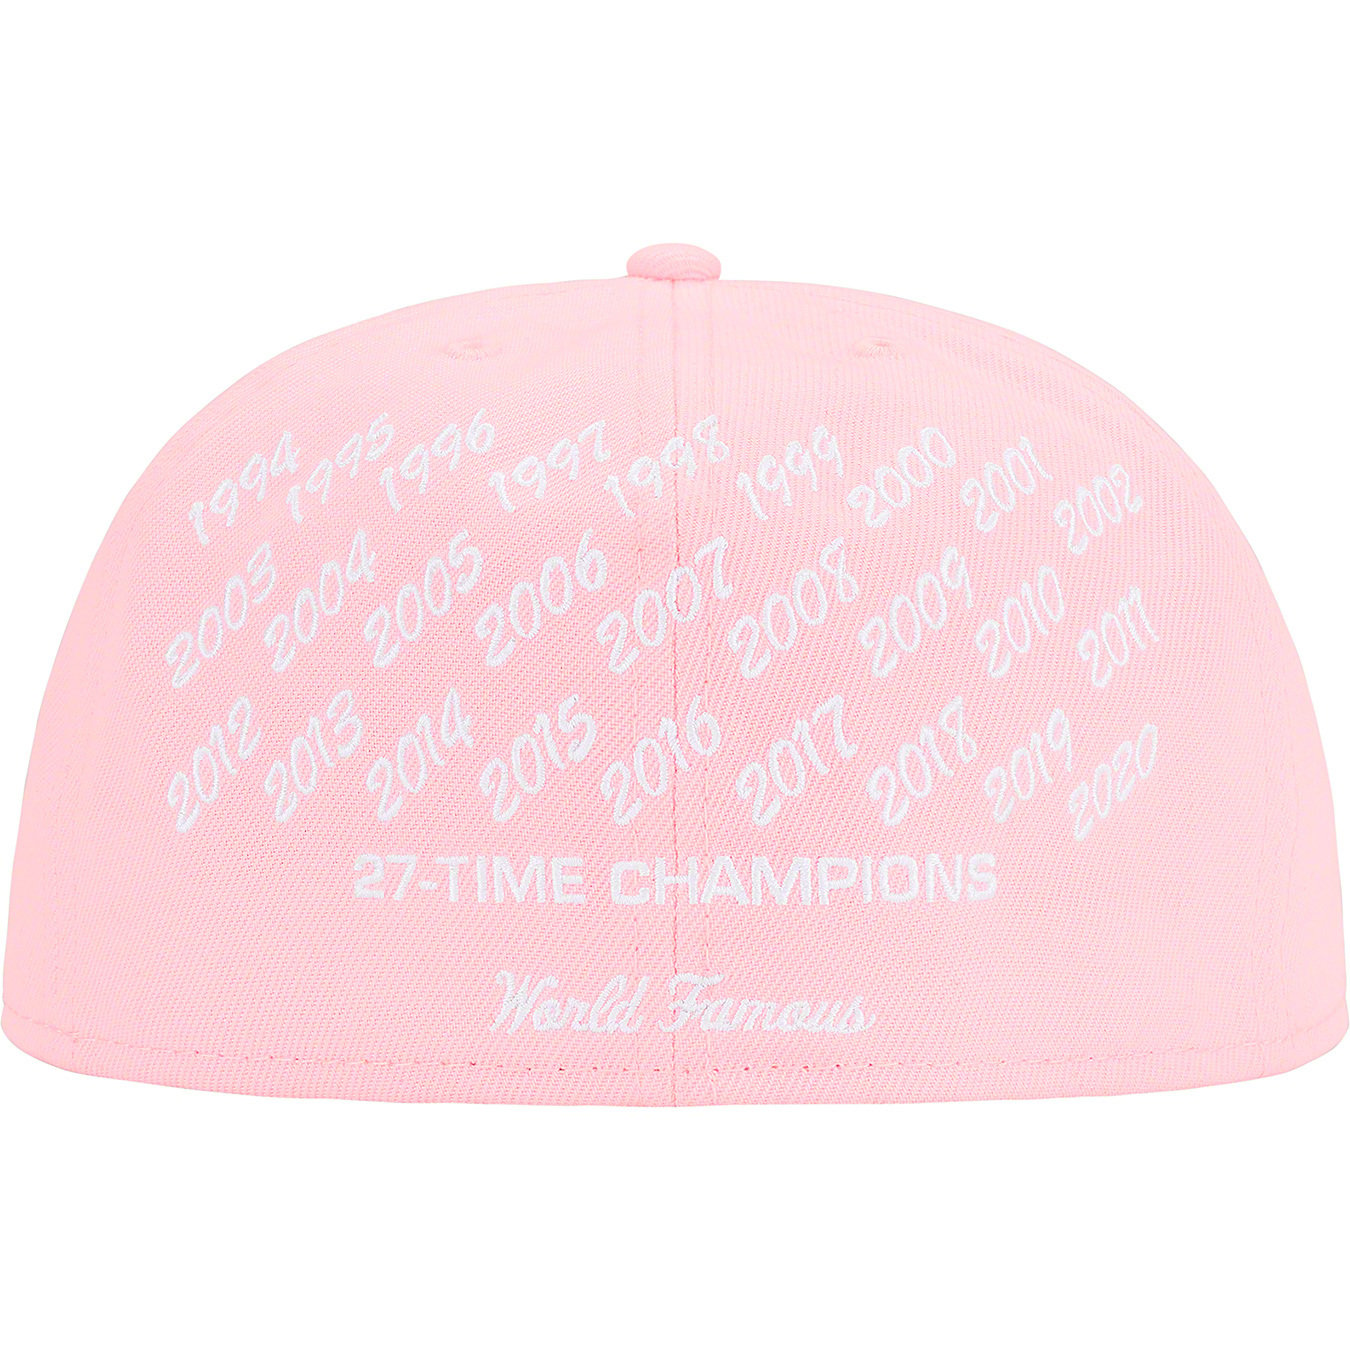 Buy Supreme x New Era Champions Box Logo Hat 'Black' - SS21H30